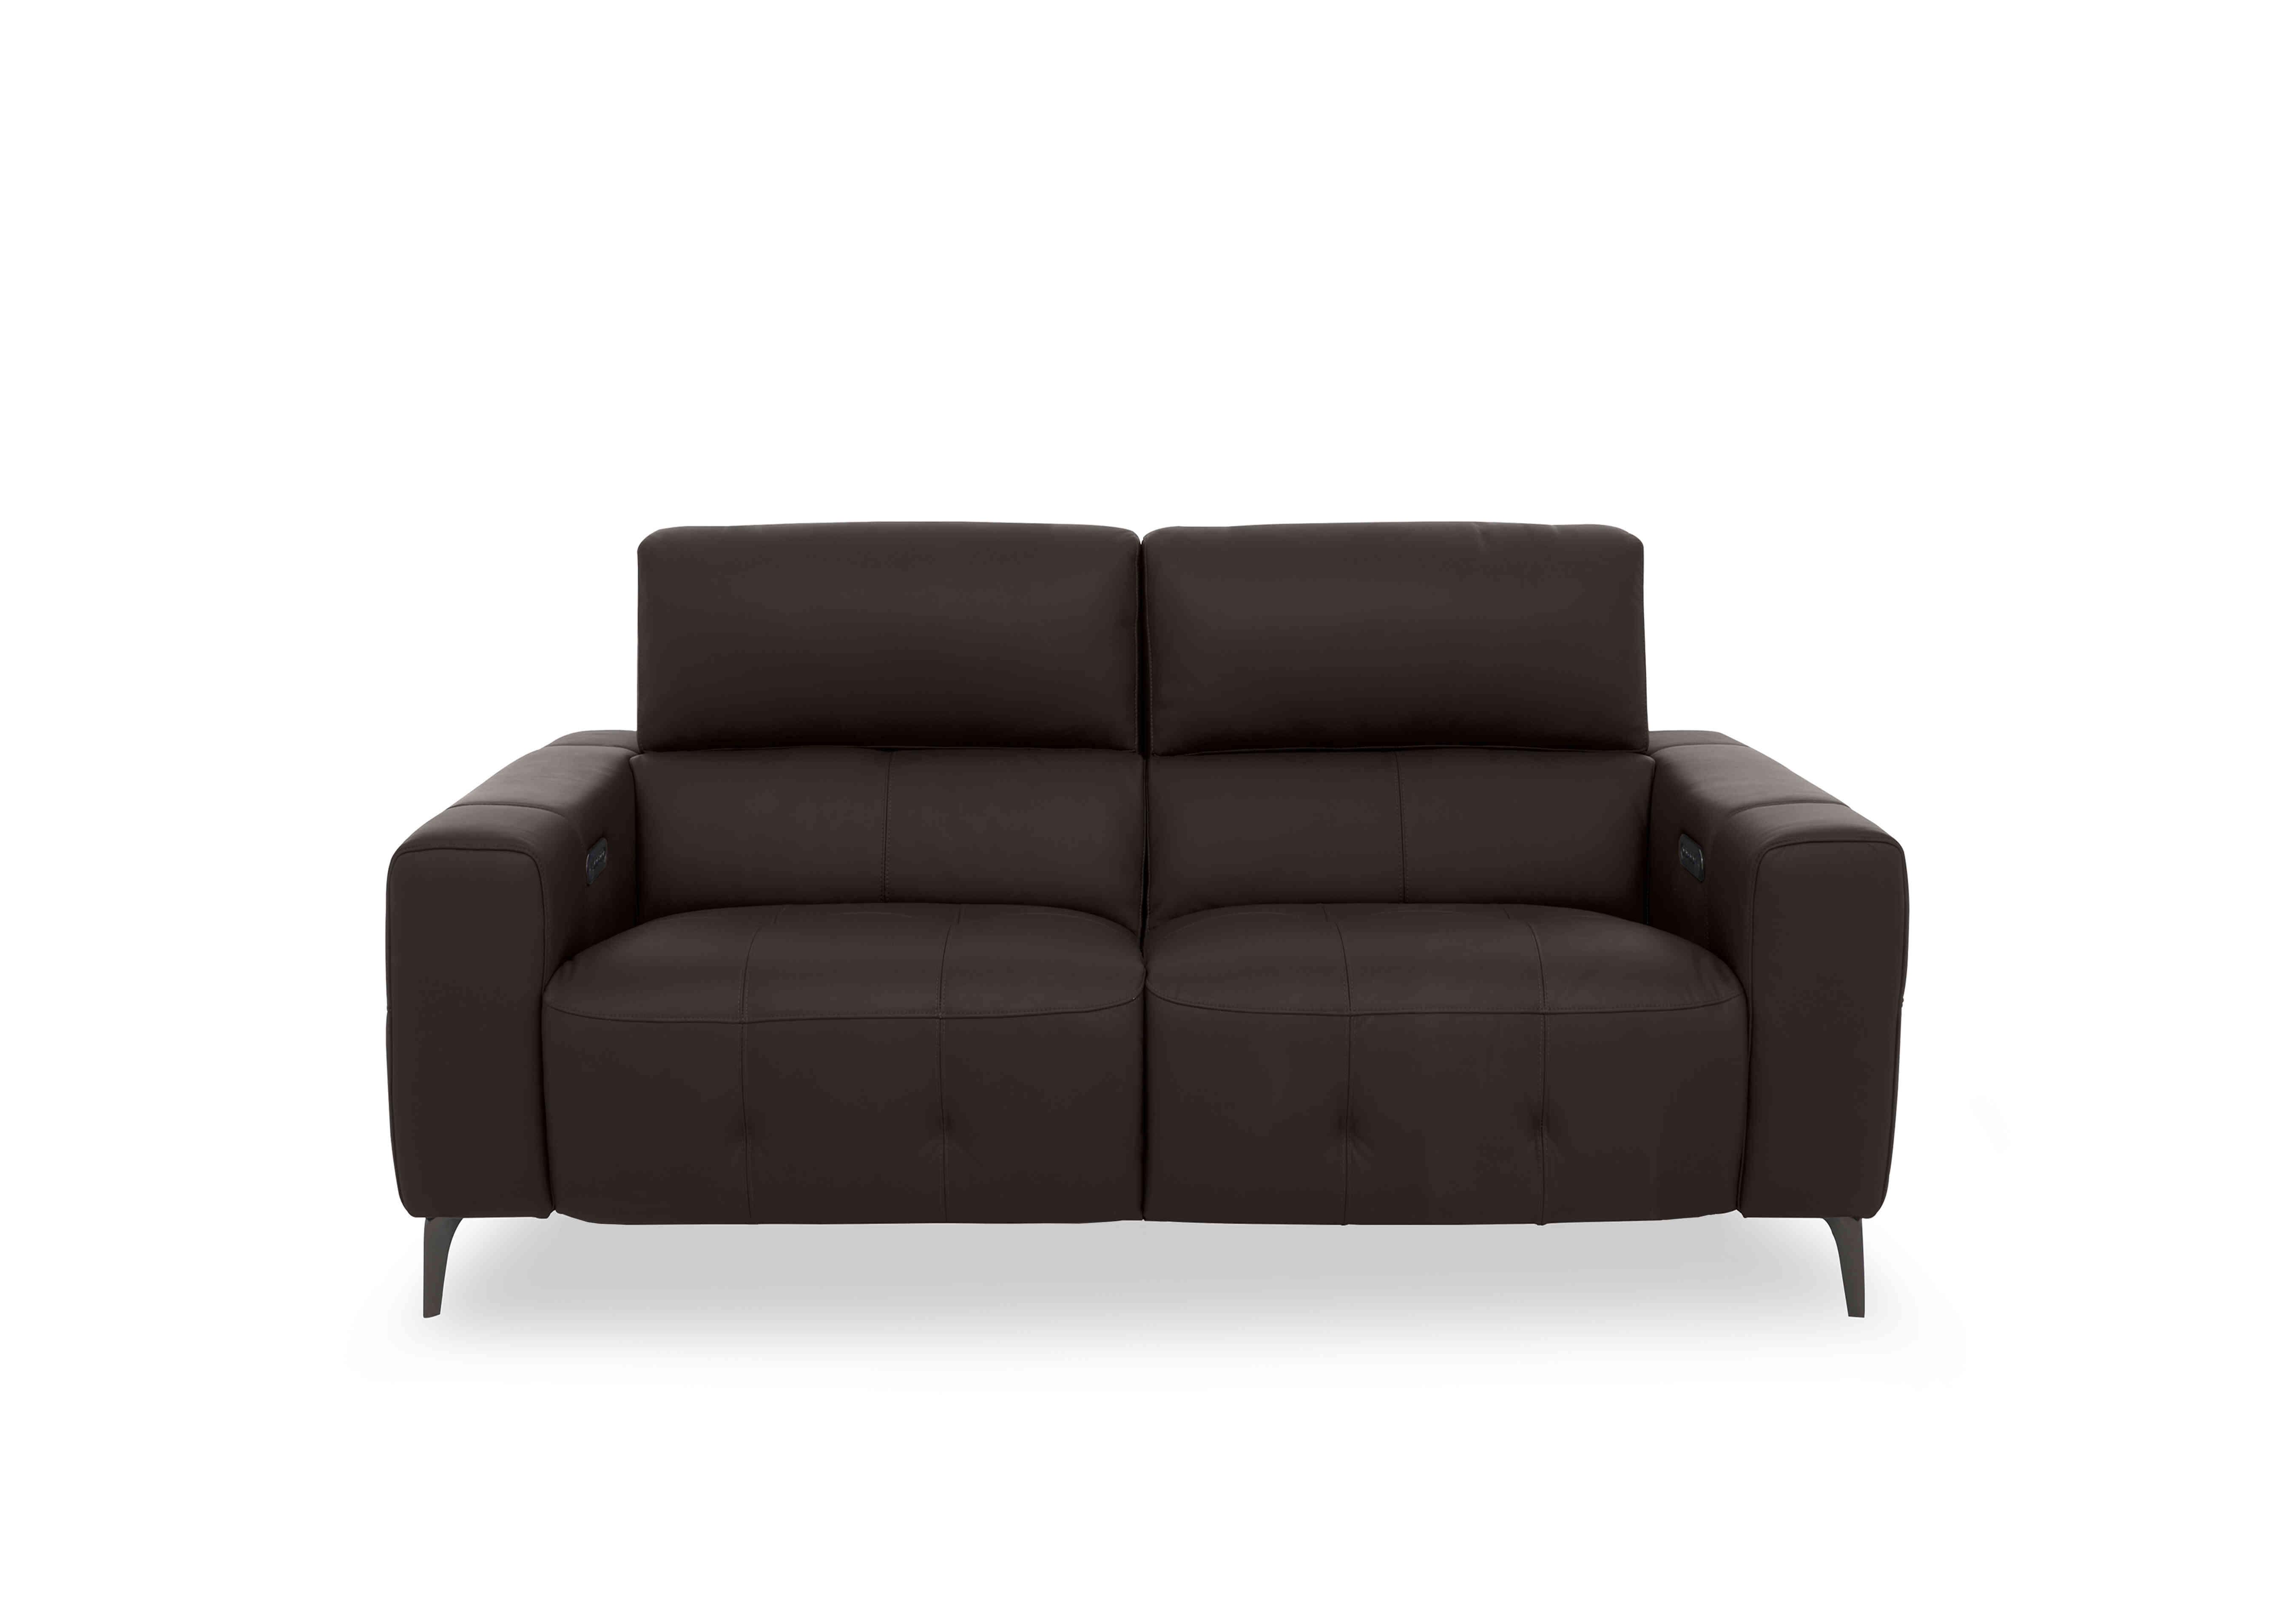 New York 2 Seater Leather Sofa in Bv-1748 Dark Chocolate on Furniture Village